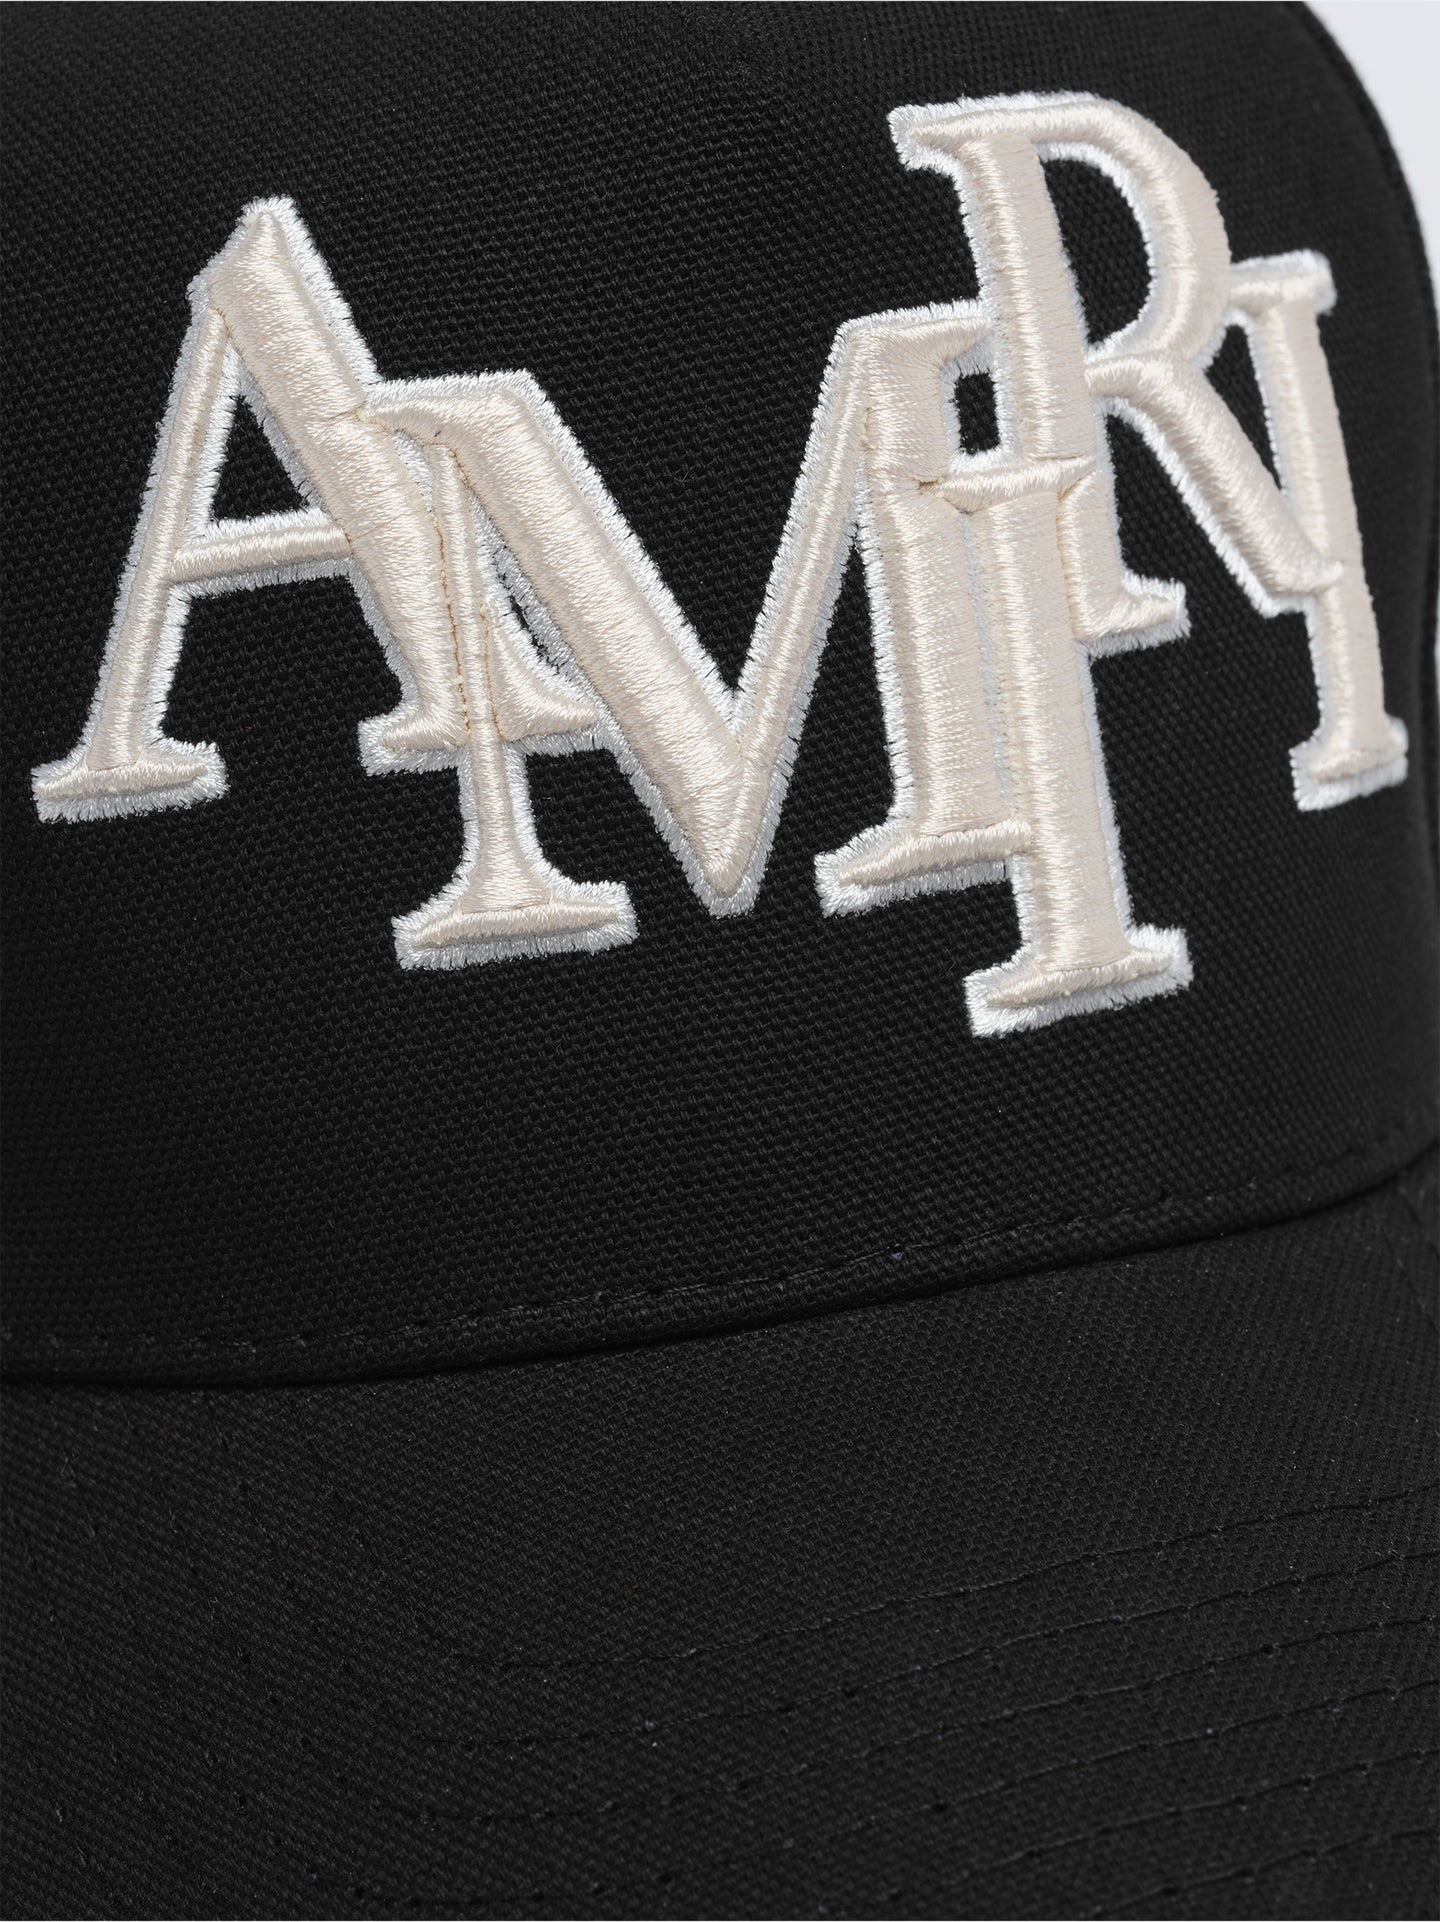 STAGGERED AMIRI CANVAS HAT - Black